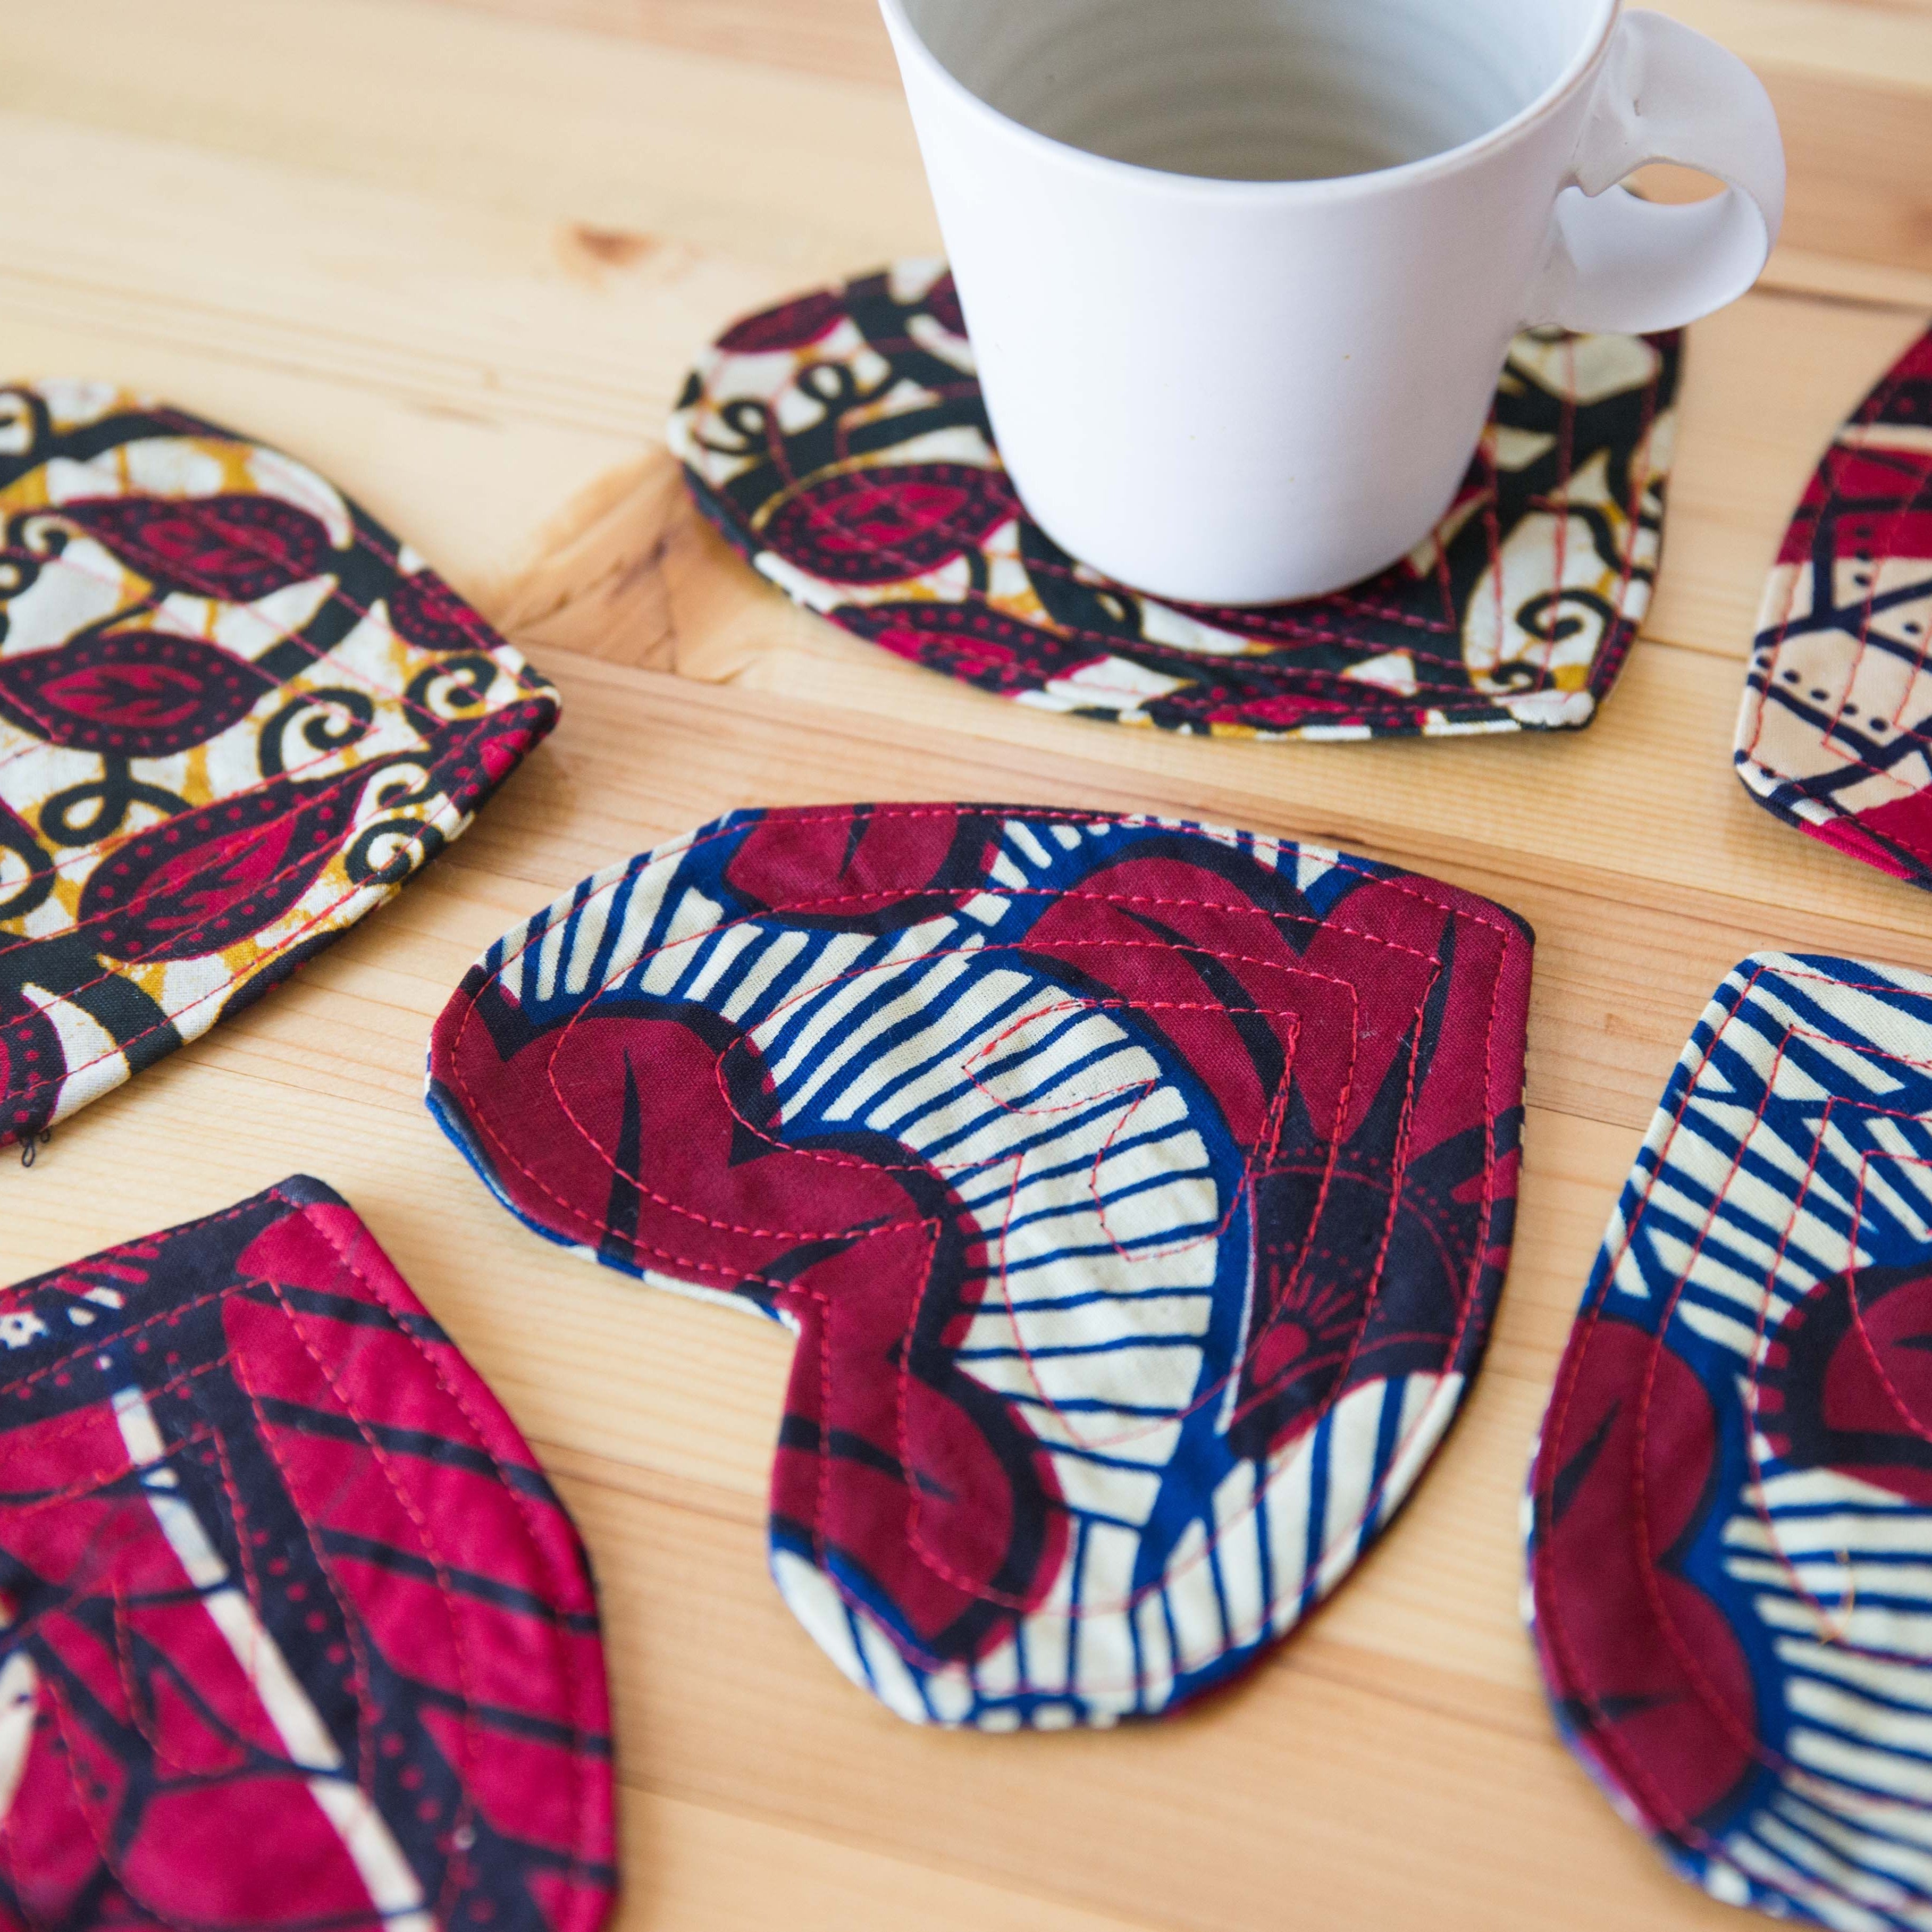 Kitenge Coasters - Ugandan materials and design for a fair trade boutique